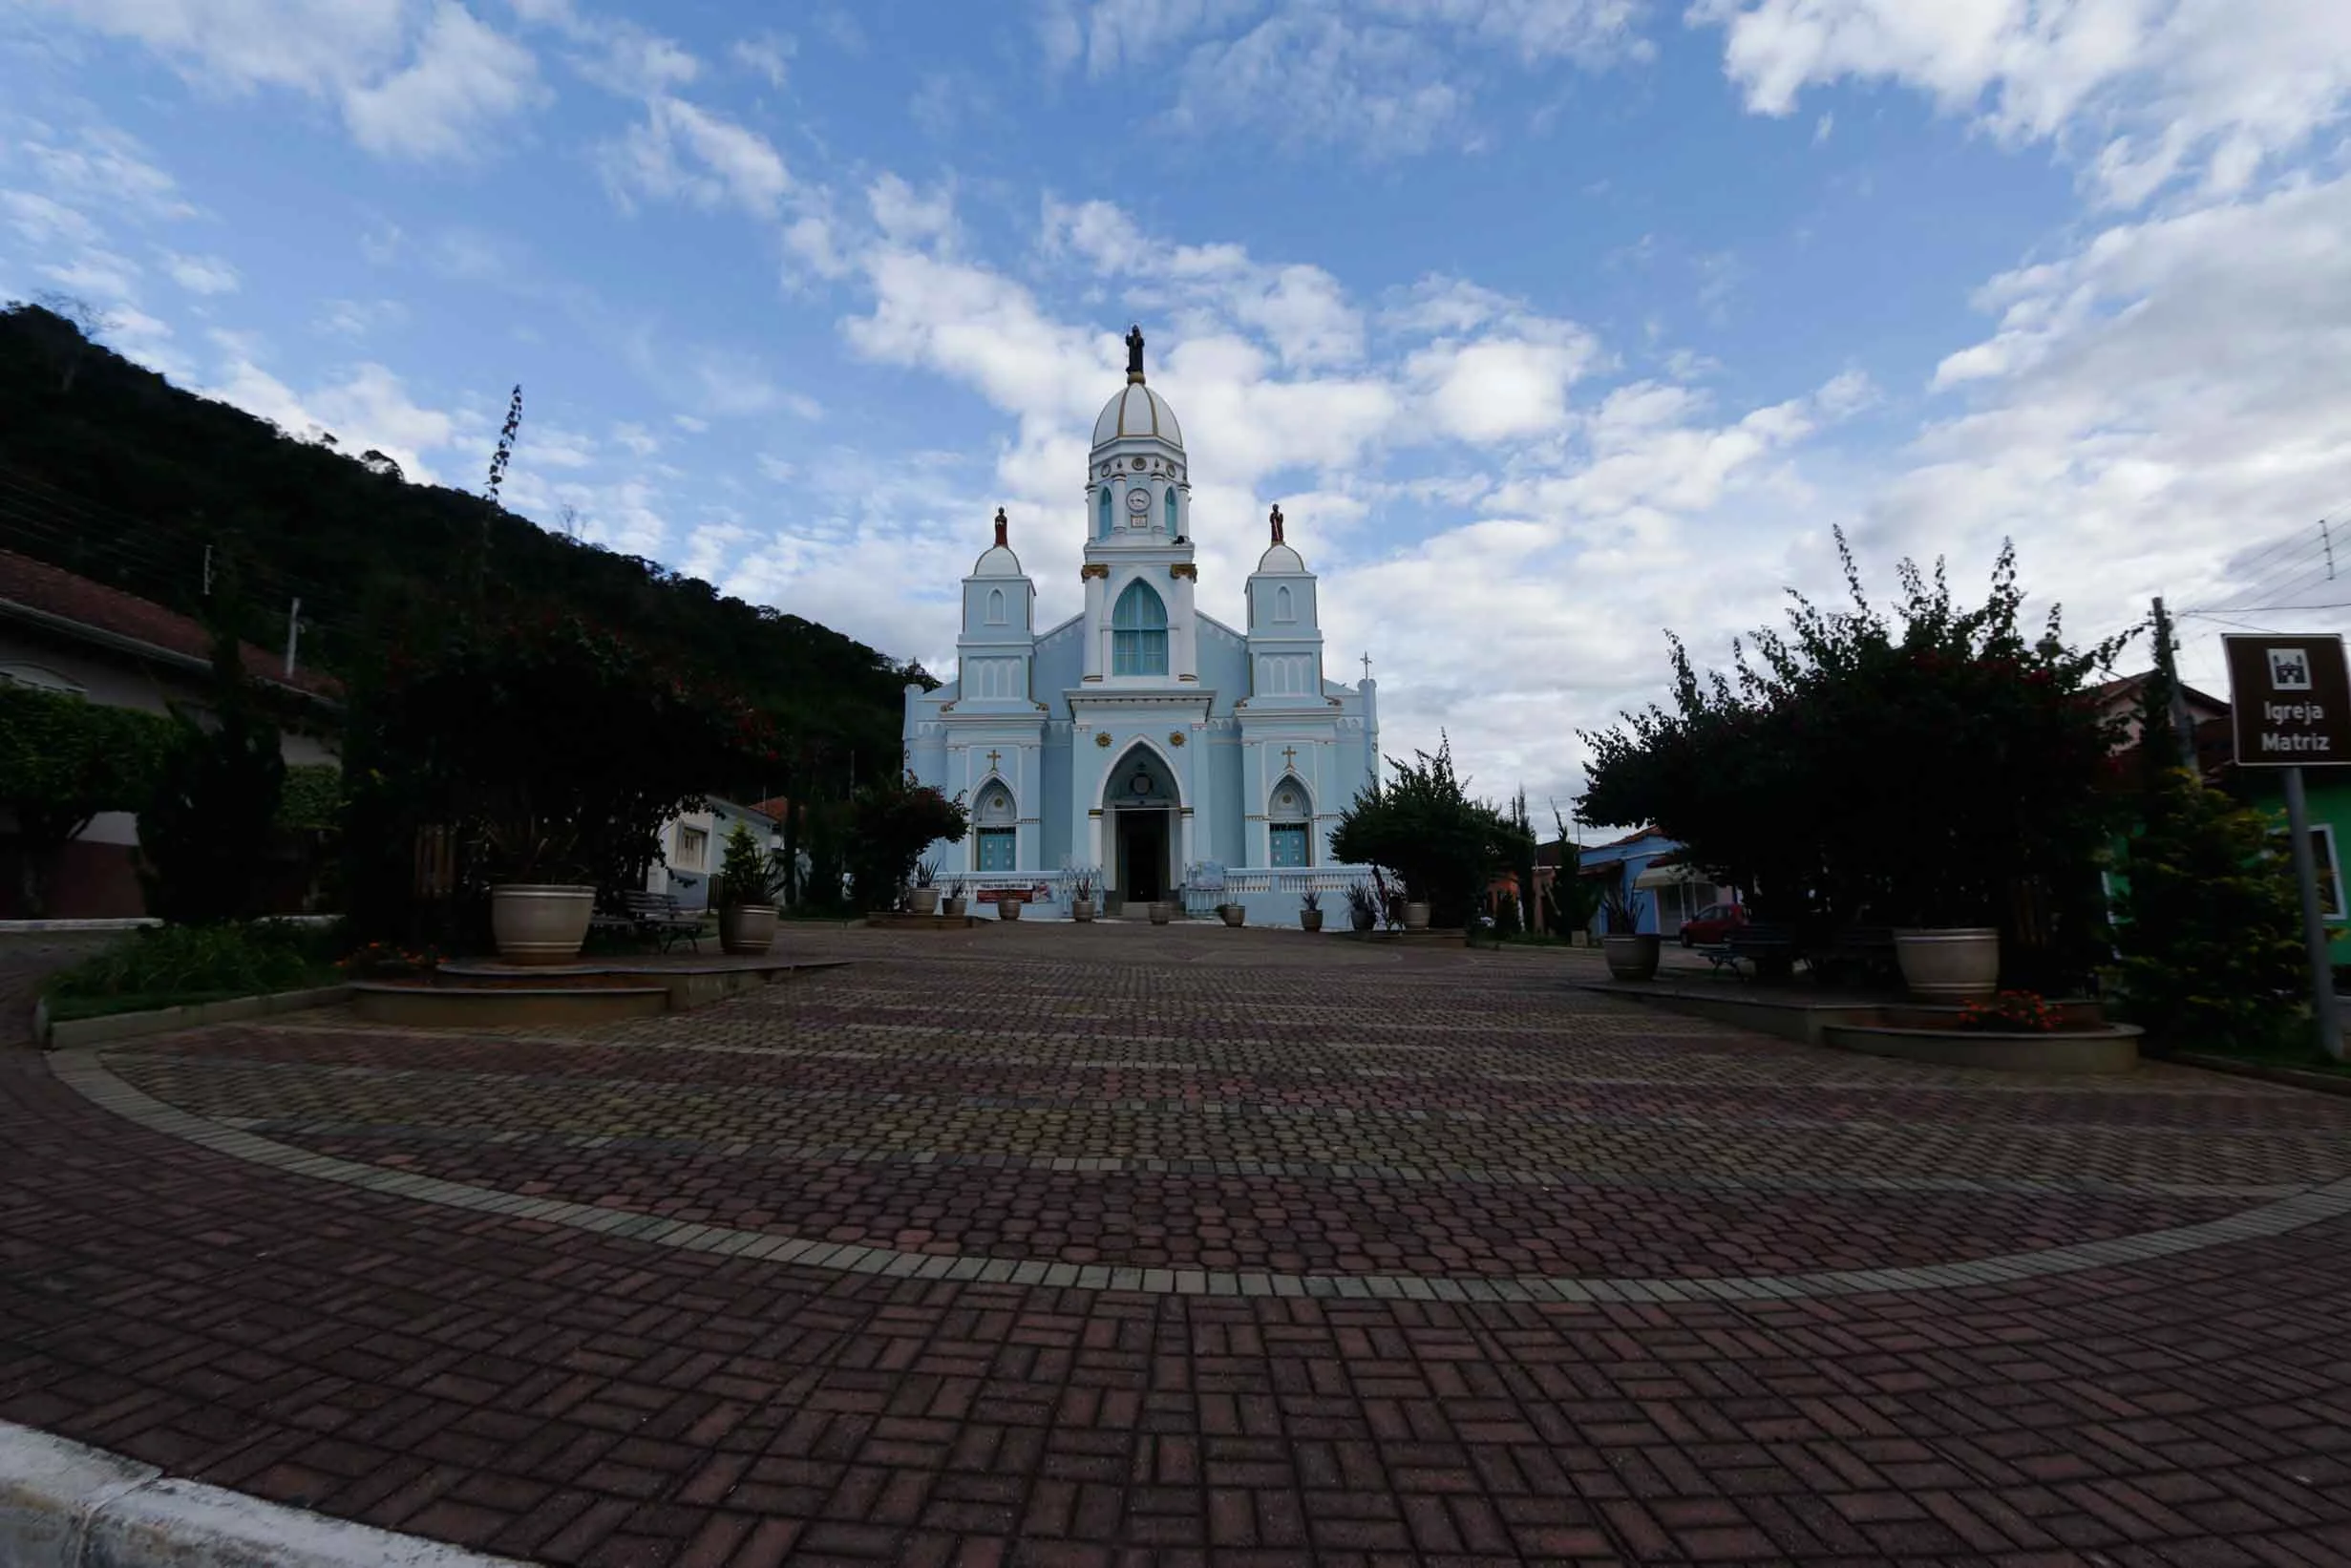 Sao-Bento-do-Sapucai-Turismo-Religioso-Igreja-Matriz-_MG_6316-bx